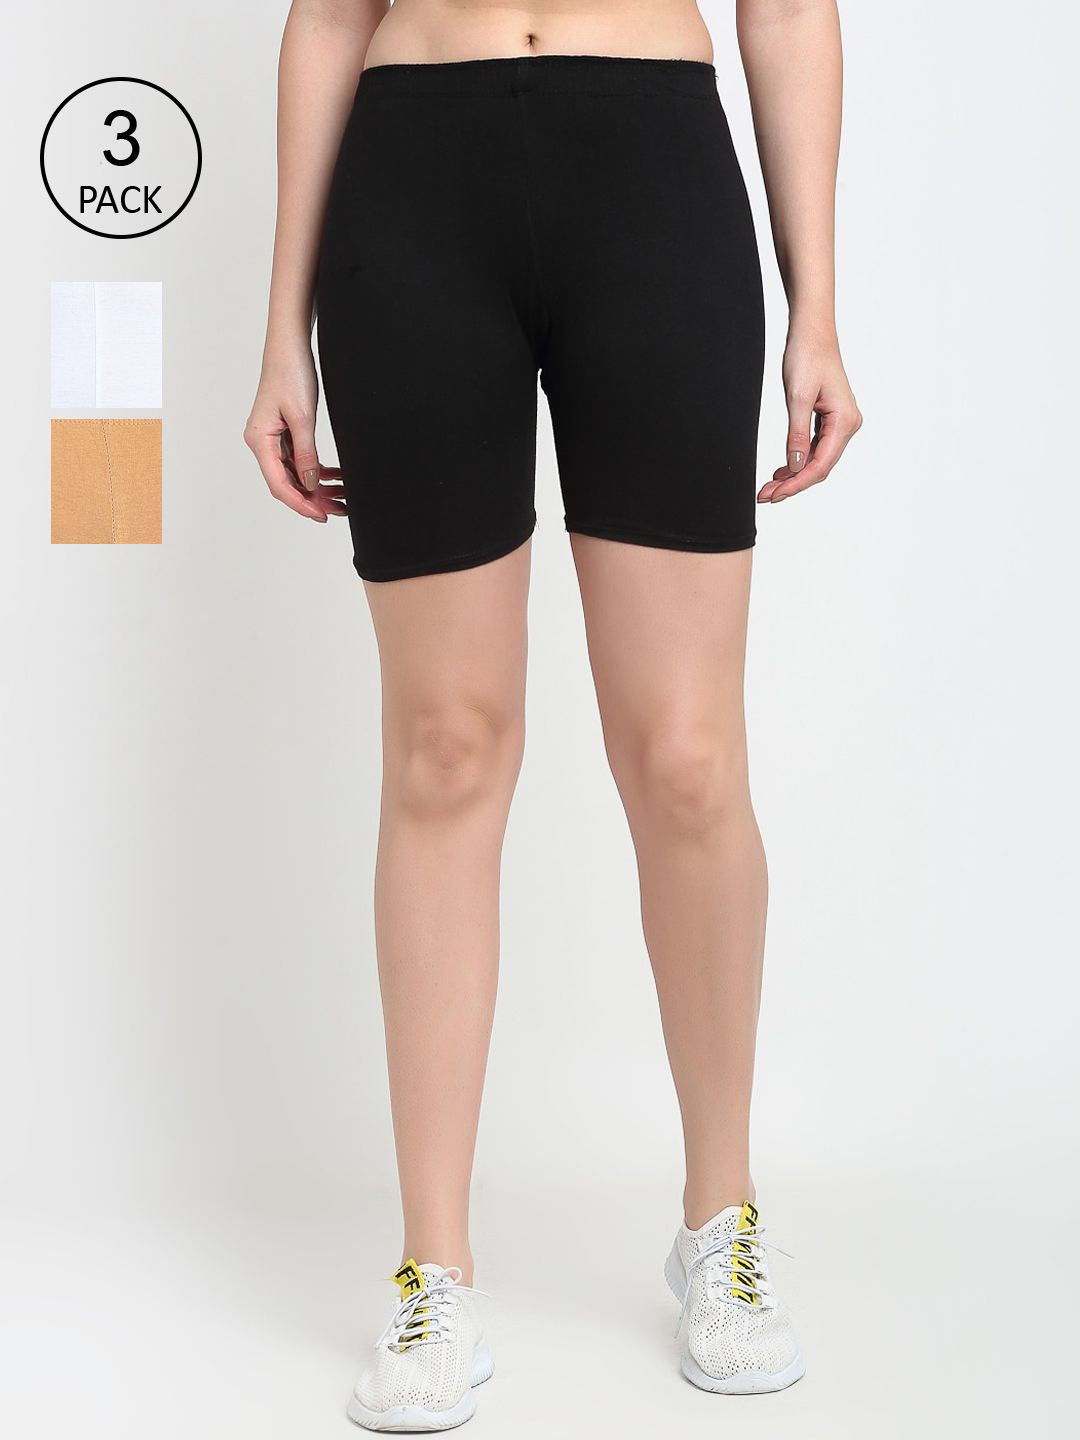 GRACIT Women Black White & Beige Set Of 3 Biker Shorts Price in India